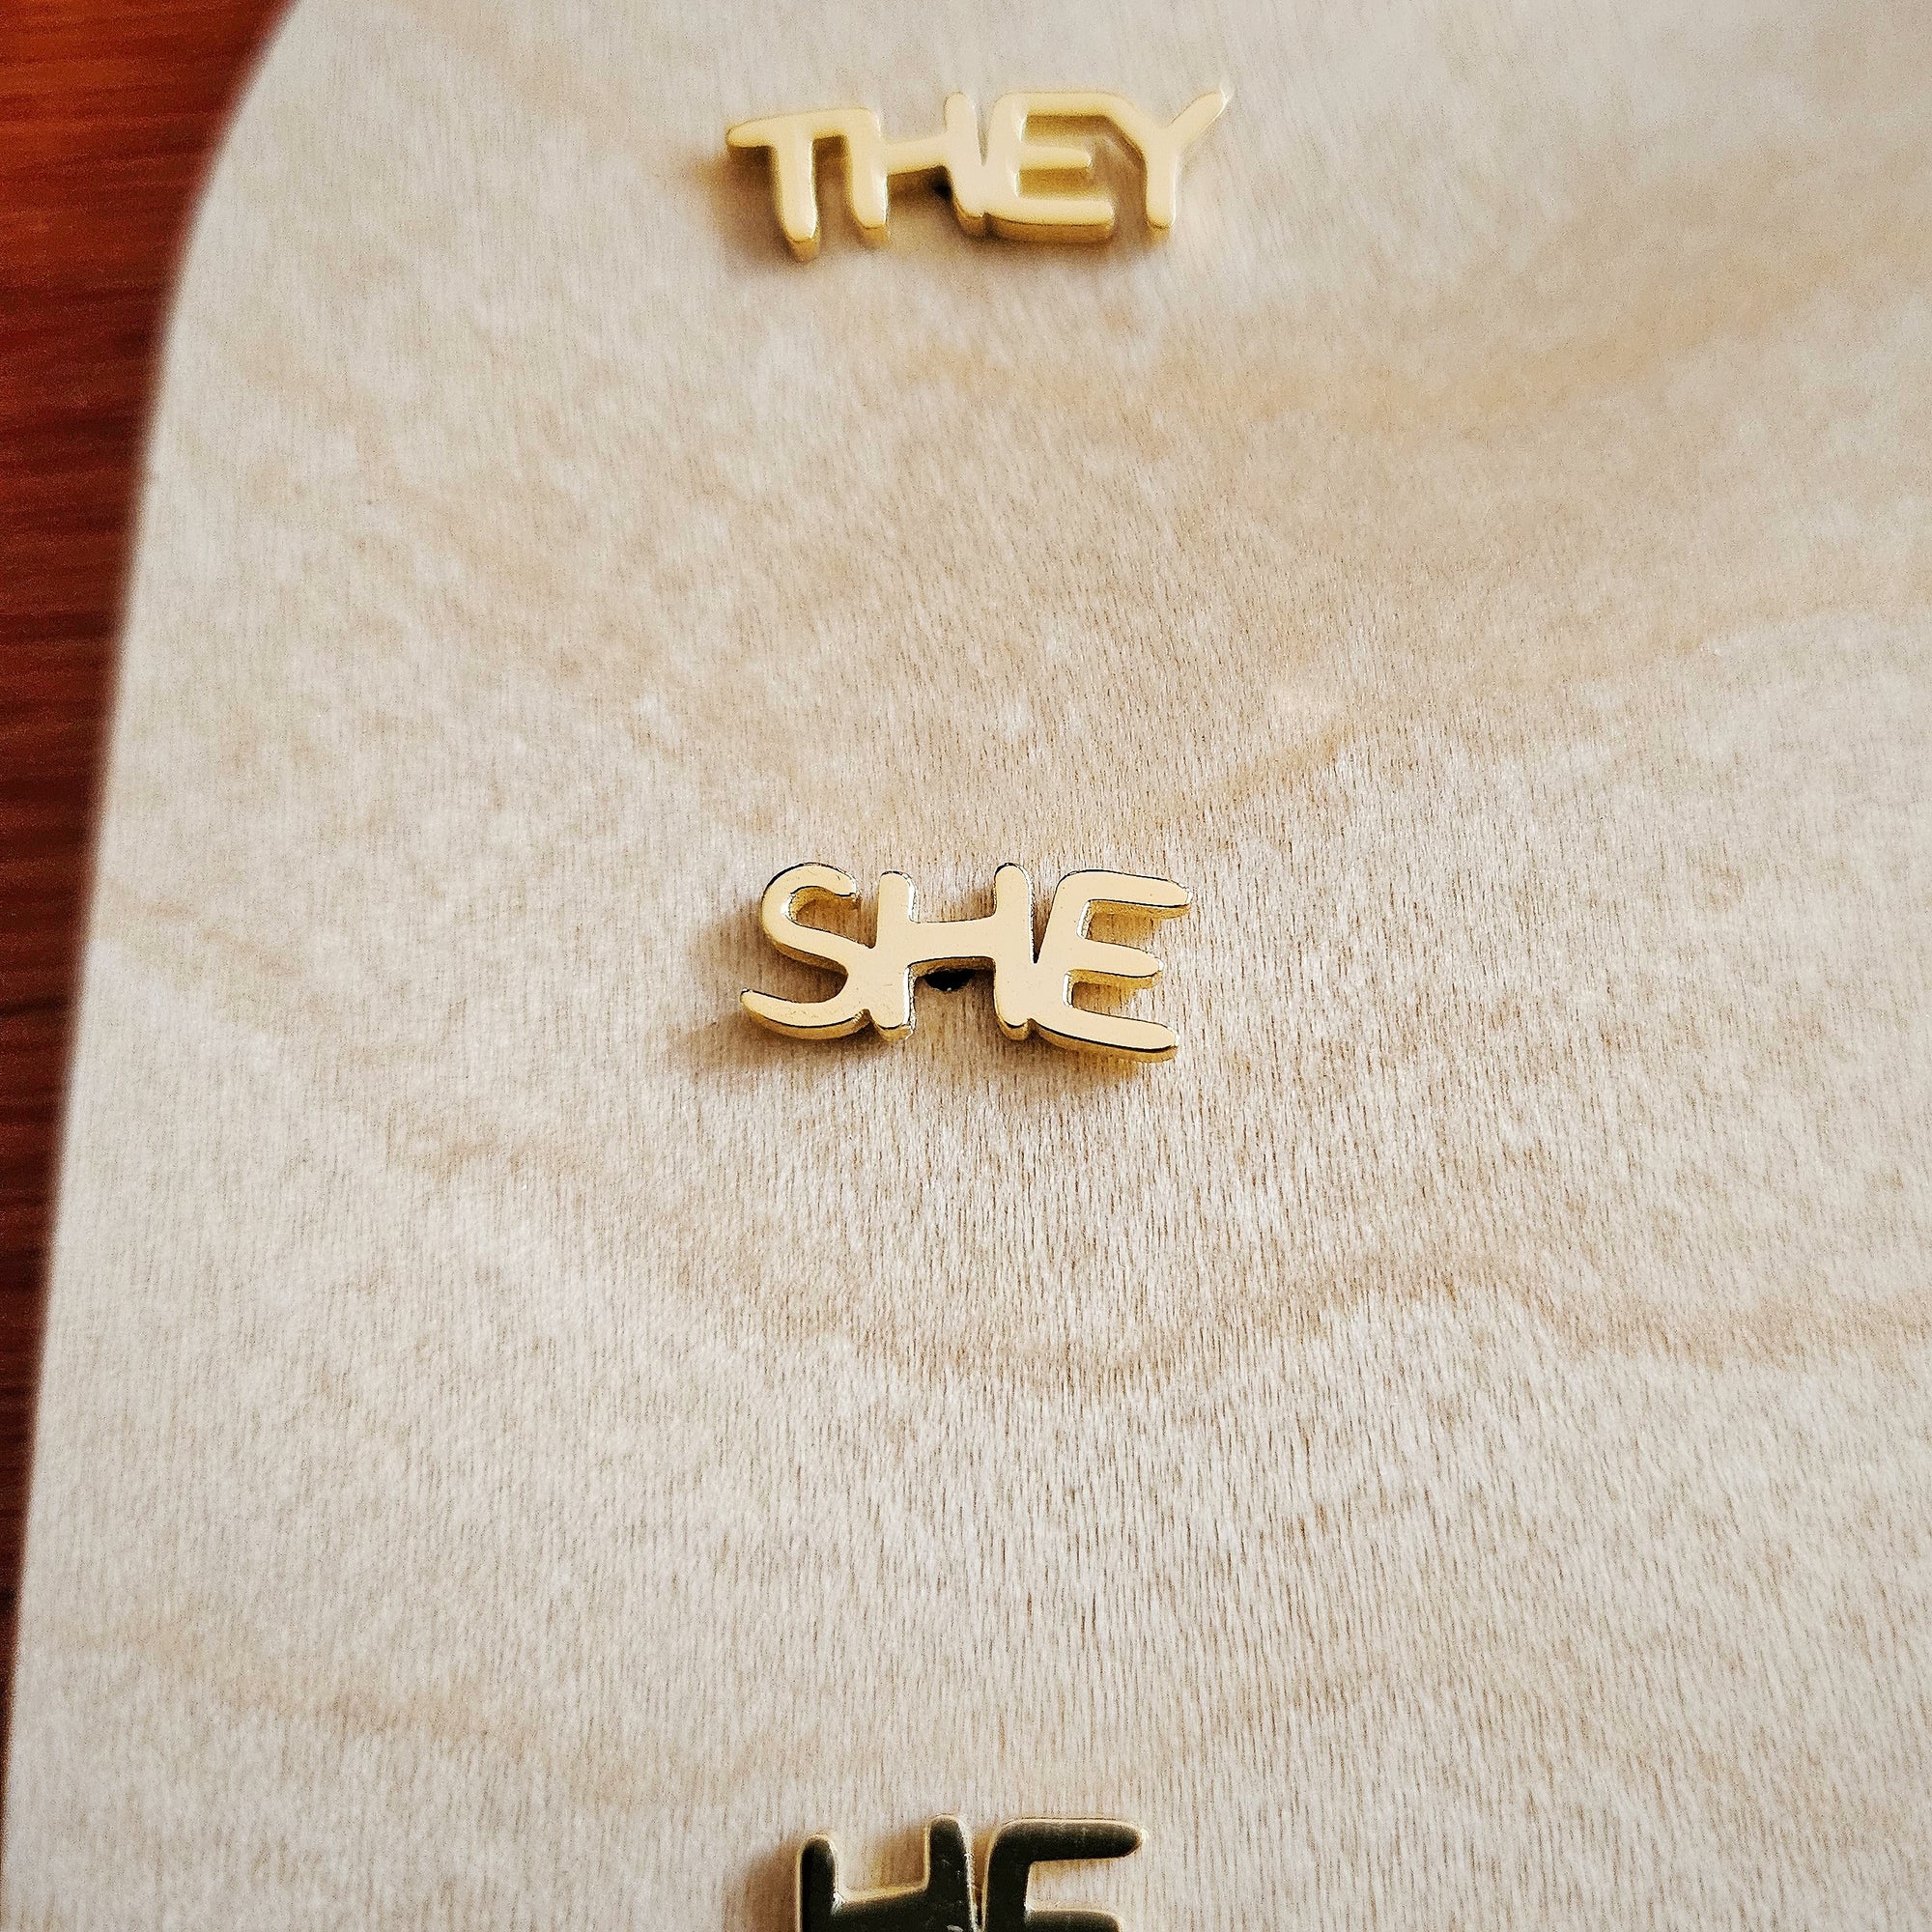 Gold Pronoun Stud Earrings - she/her